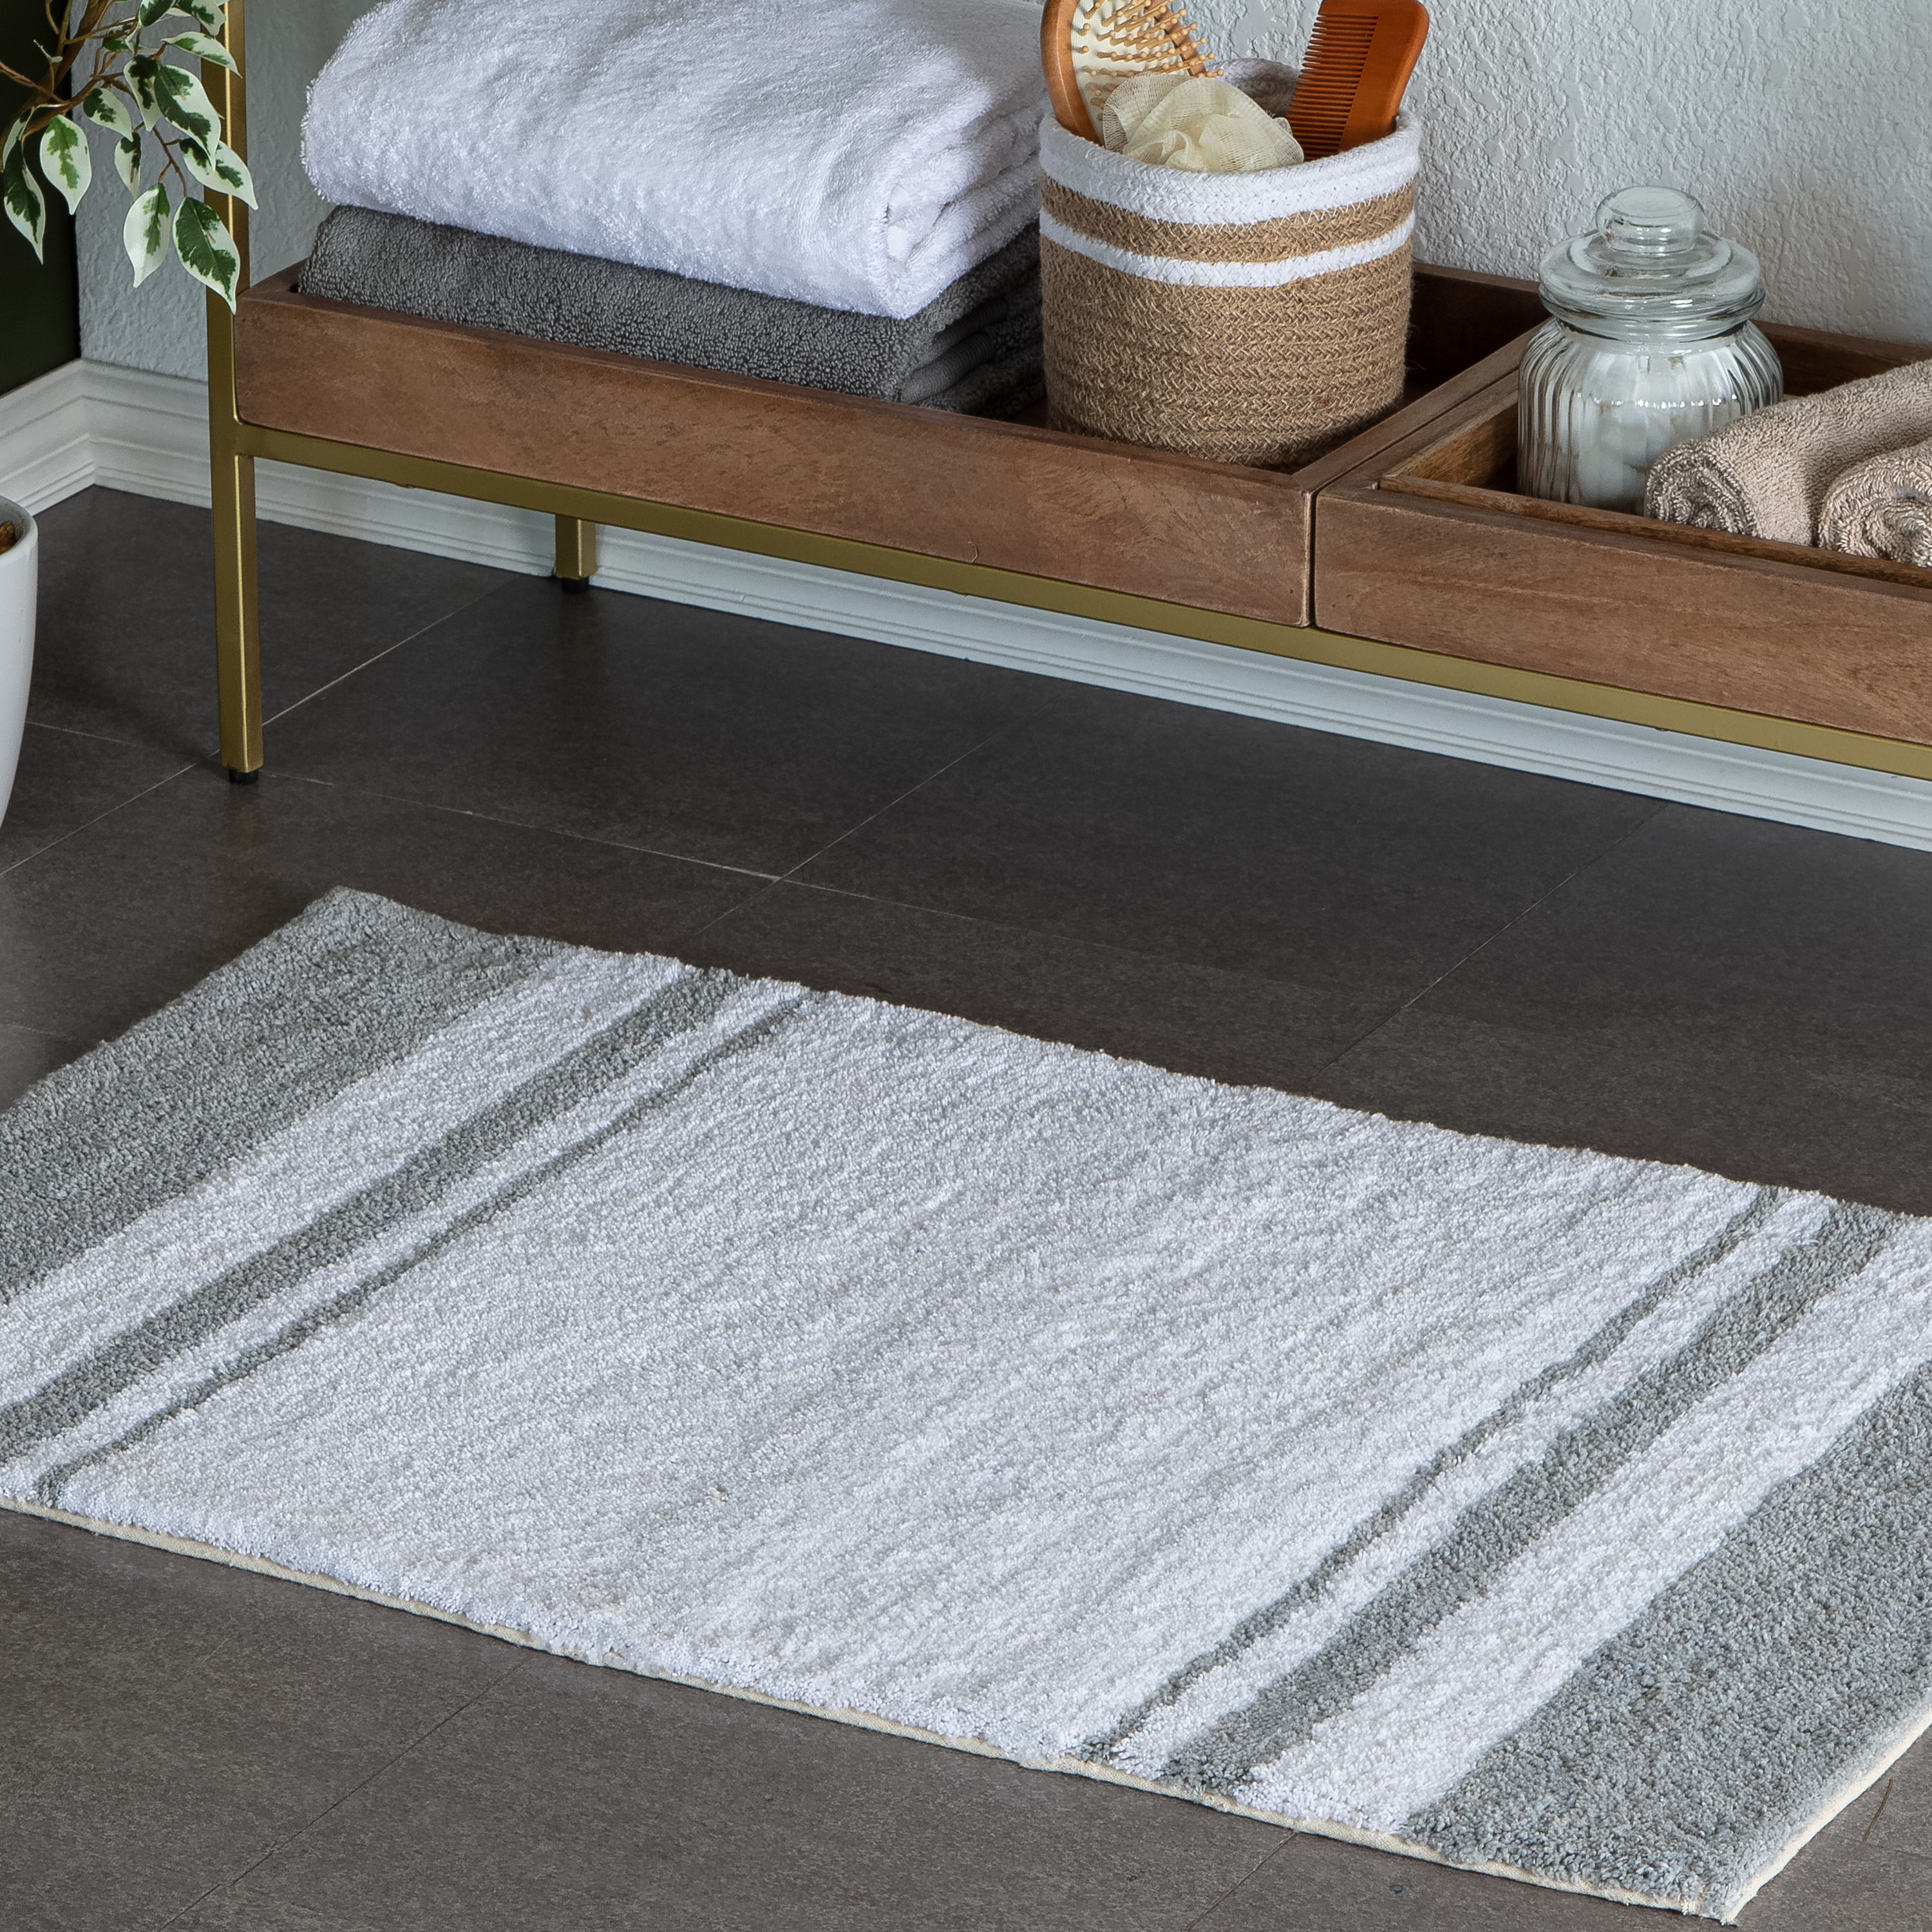 SoftStep Bath Mat by Standard Textile